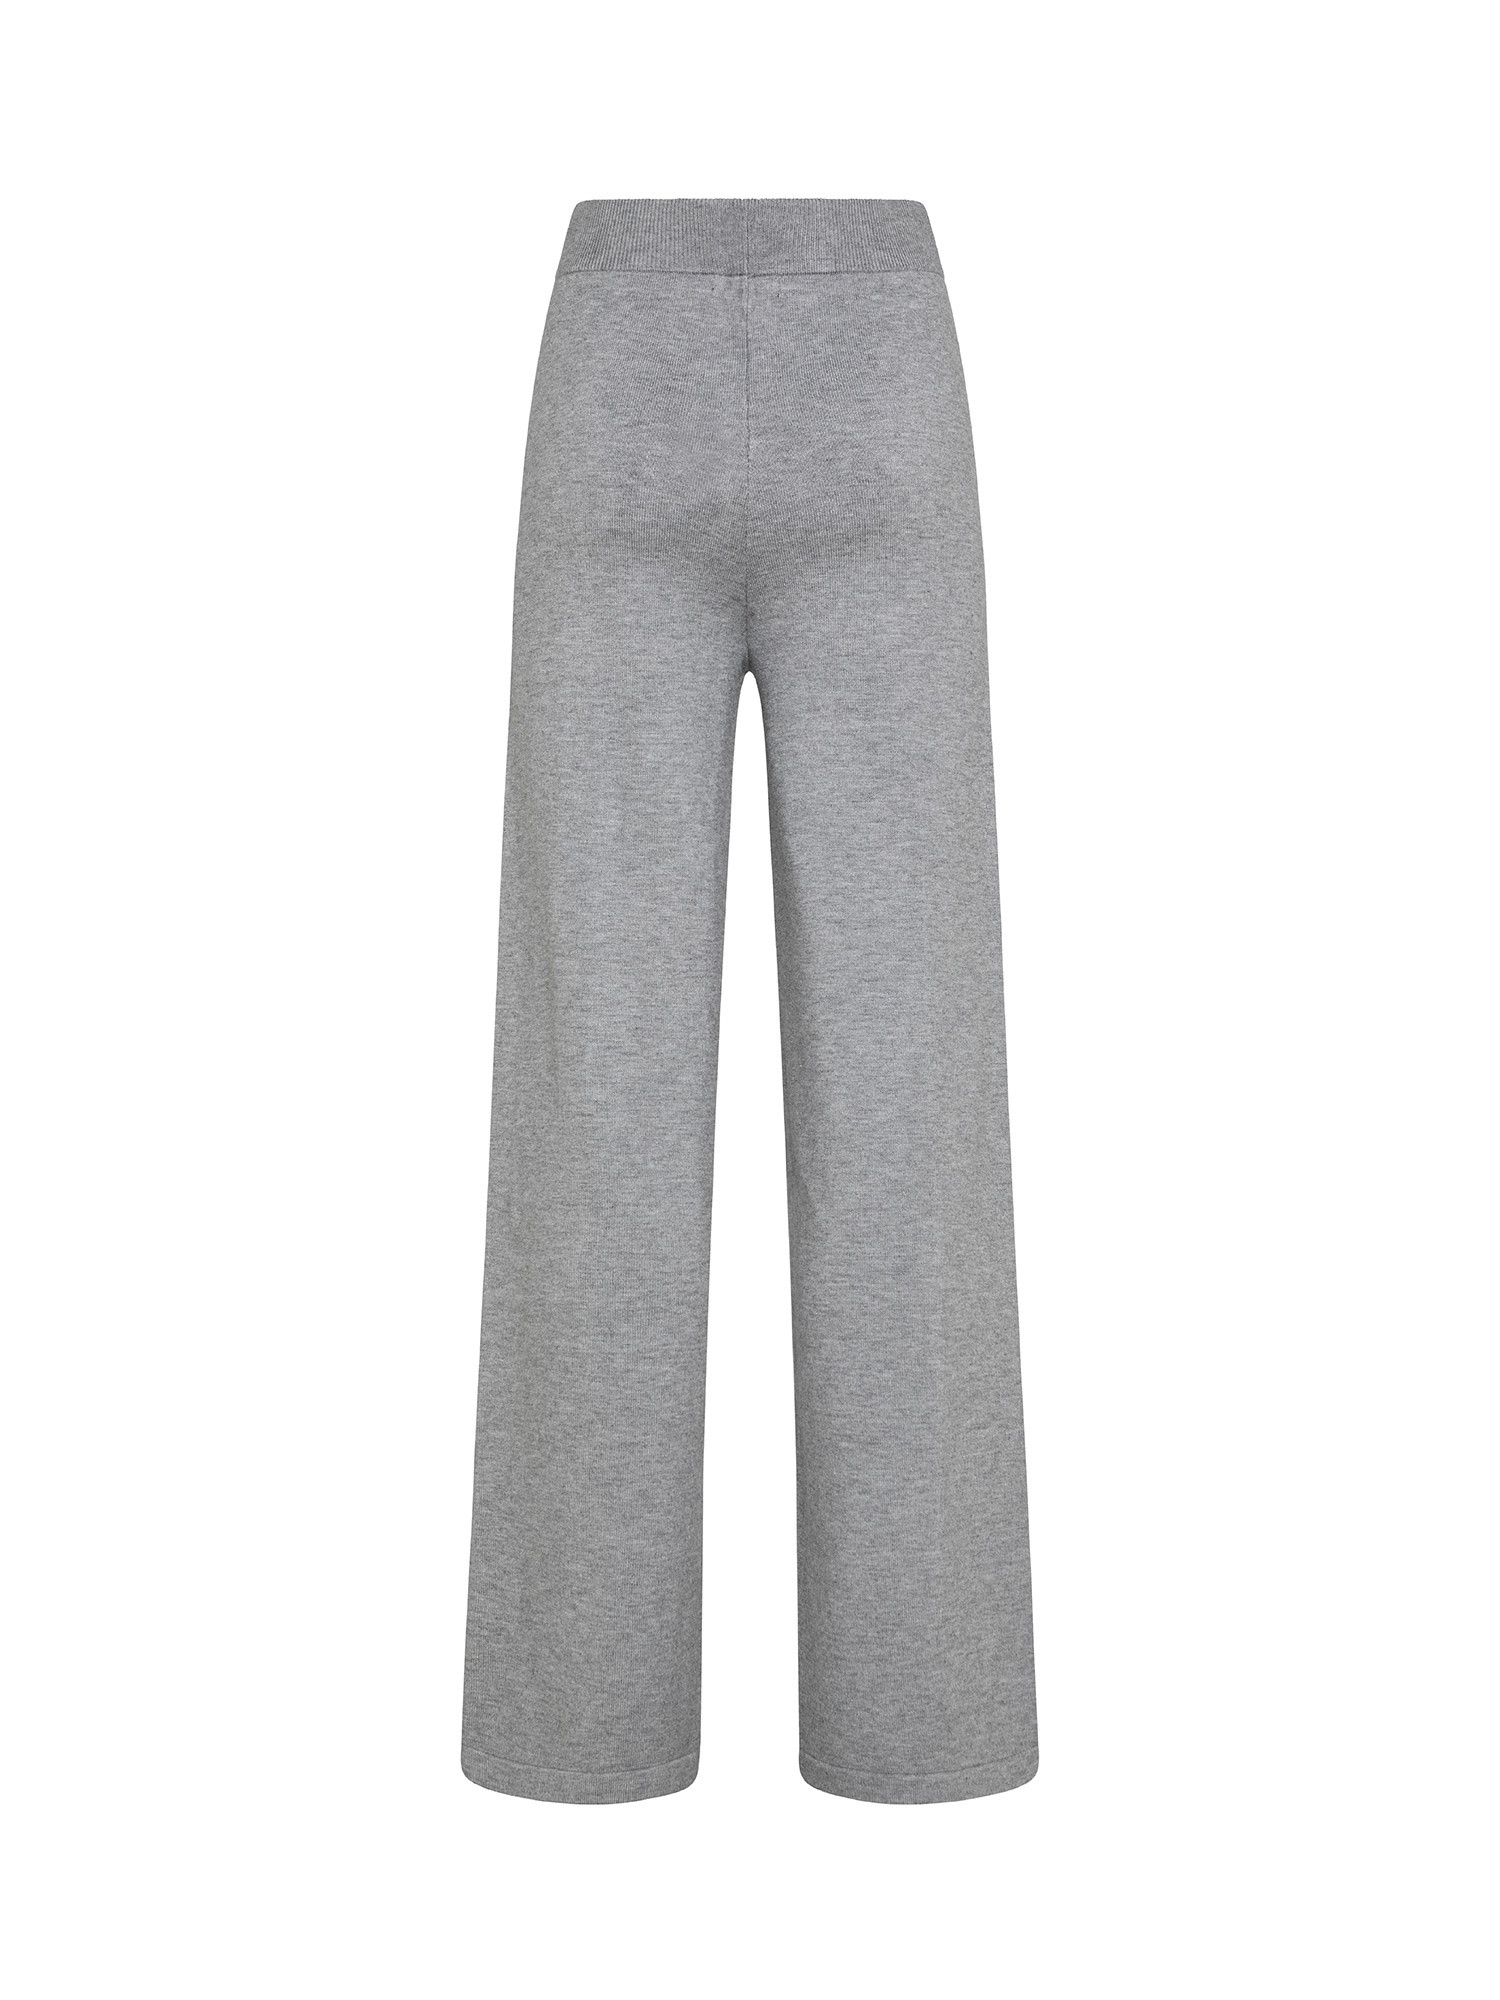 Koan - Pantalone tricot, Grigio, large image number 1